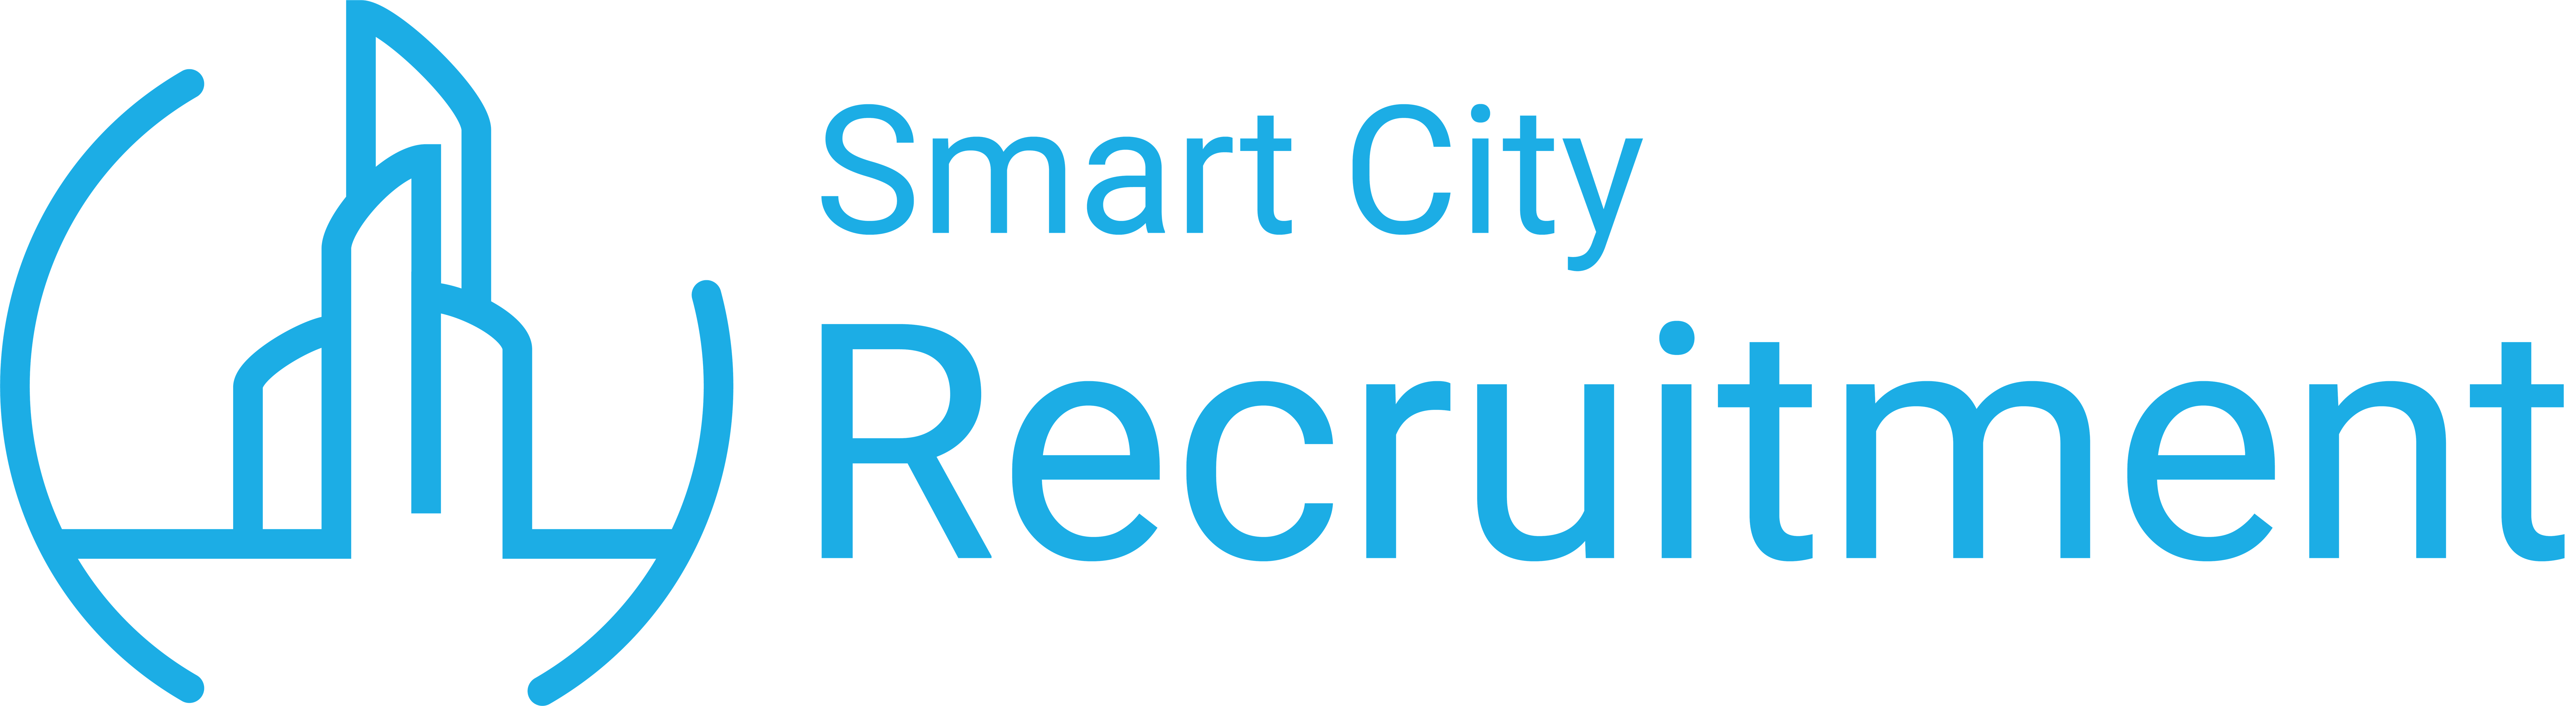 Smart City Recruitment c/o FEL GmbH